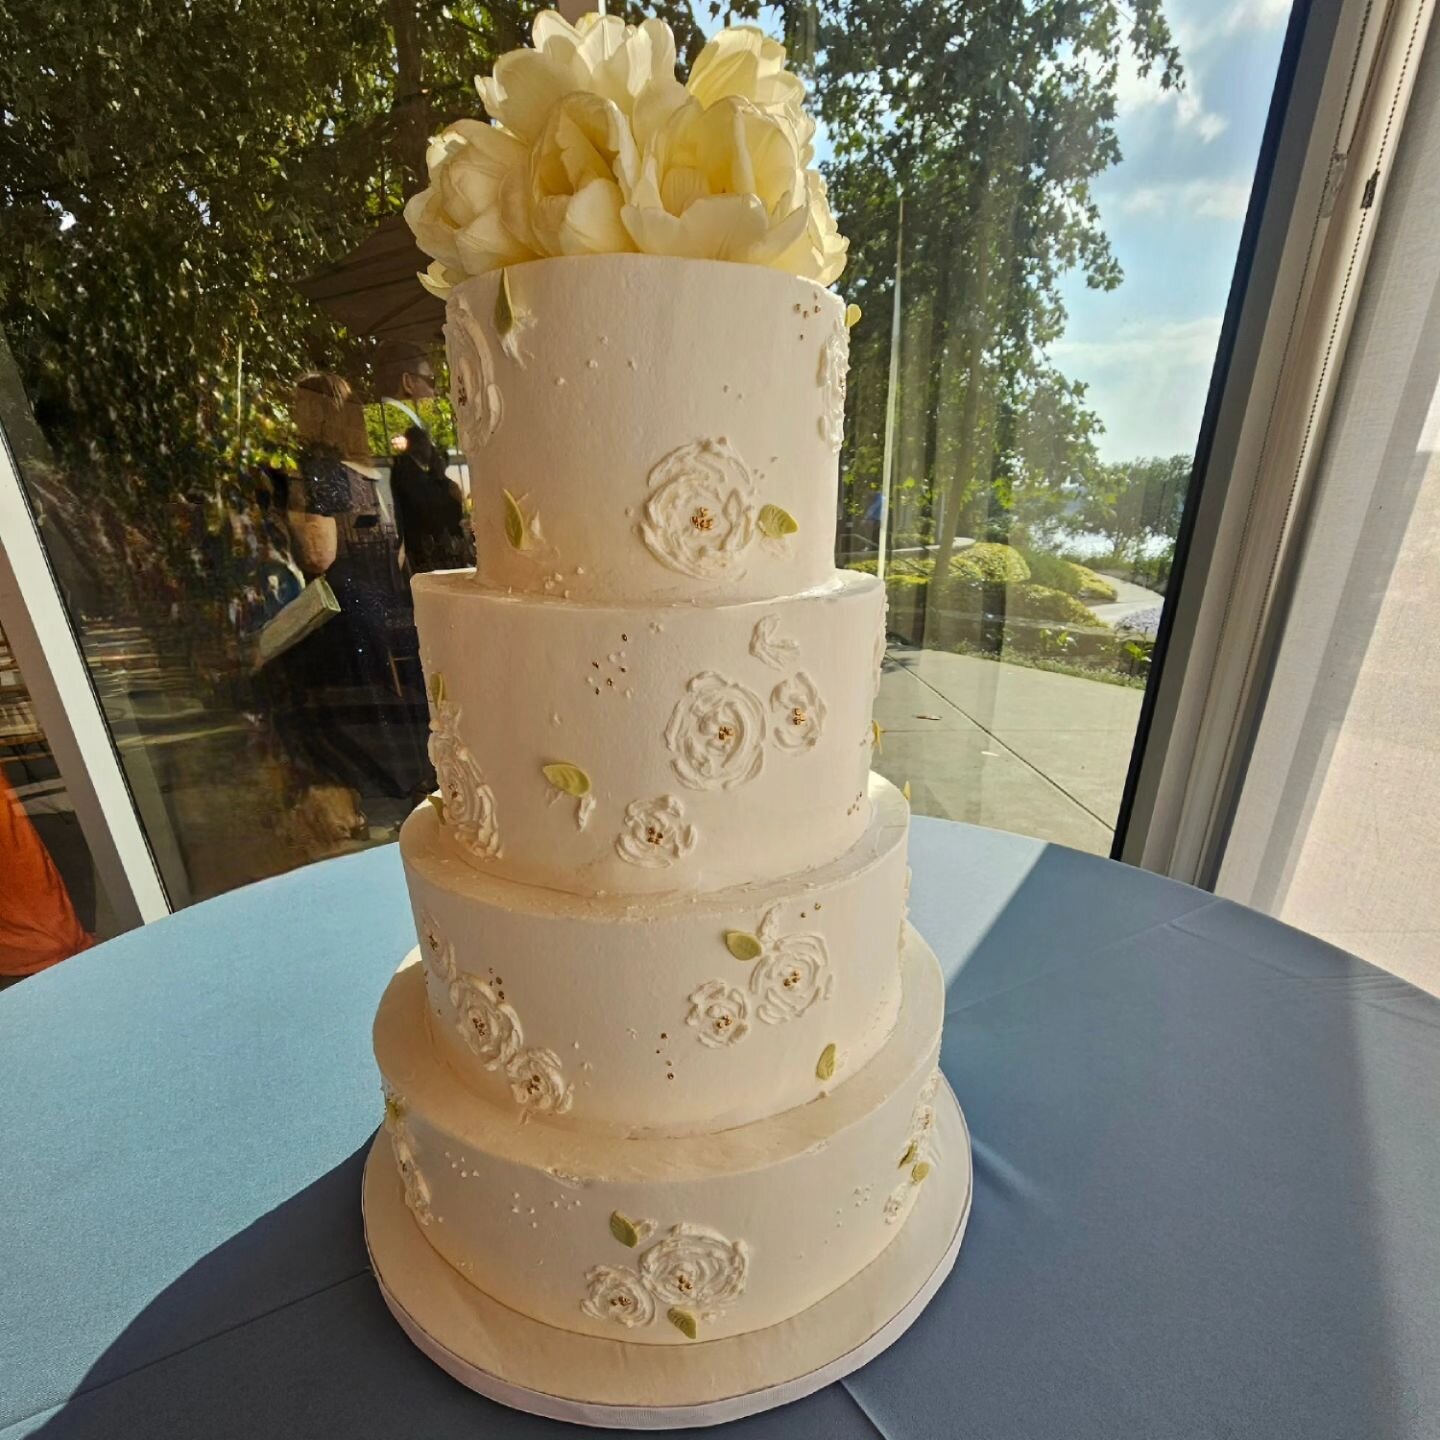 I love the delicate designs on this beautiful cake!
Congratulations to the happy couple!

#elenascakesdallas 
#elegantweddingcake 
#dallasweddingplanning 
#dallasbakery 
#dallasweddingcakes